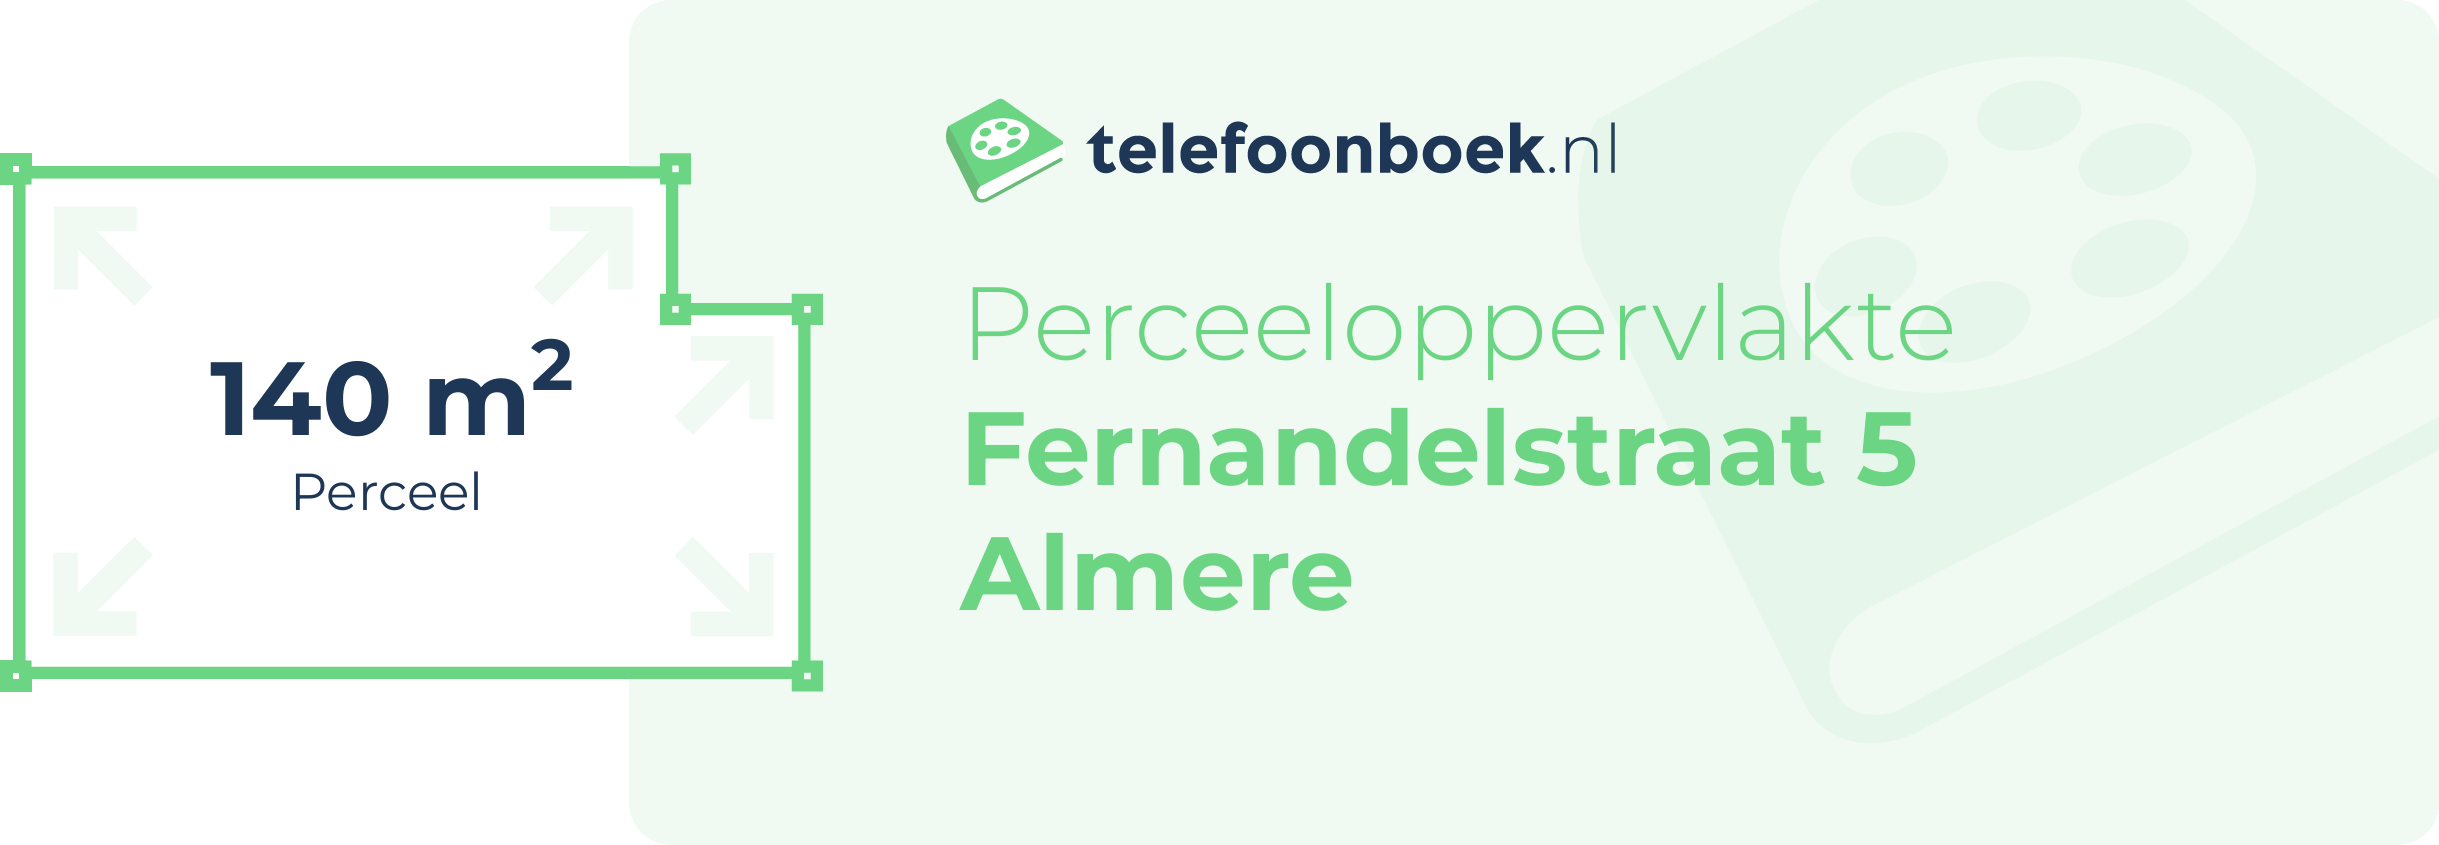 Perceeloppervlakte Fernandelstraat 5 Almere